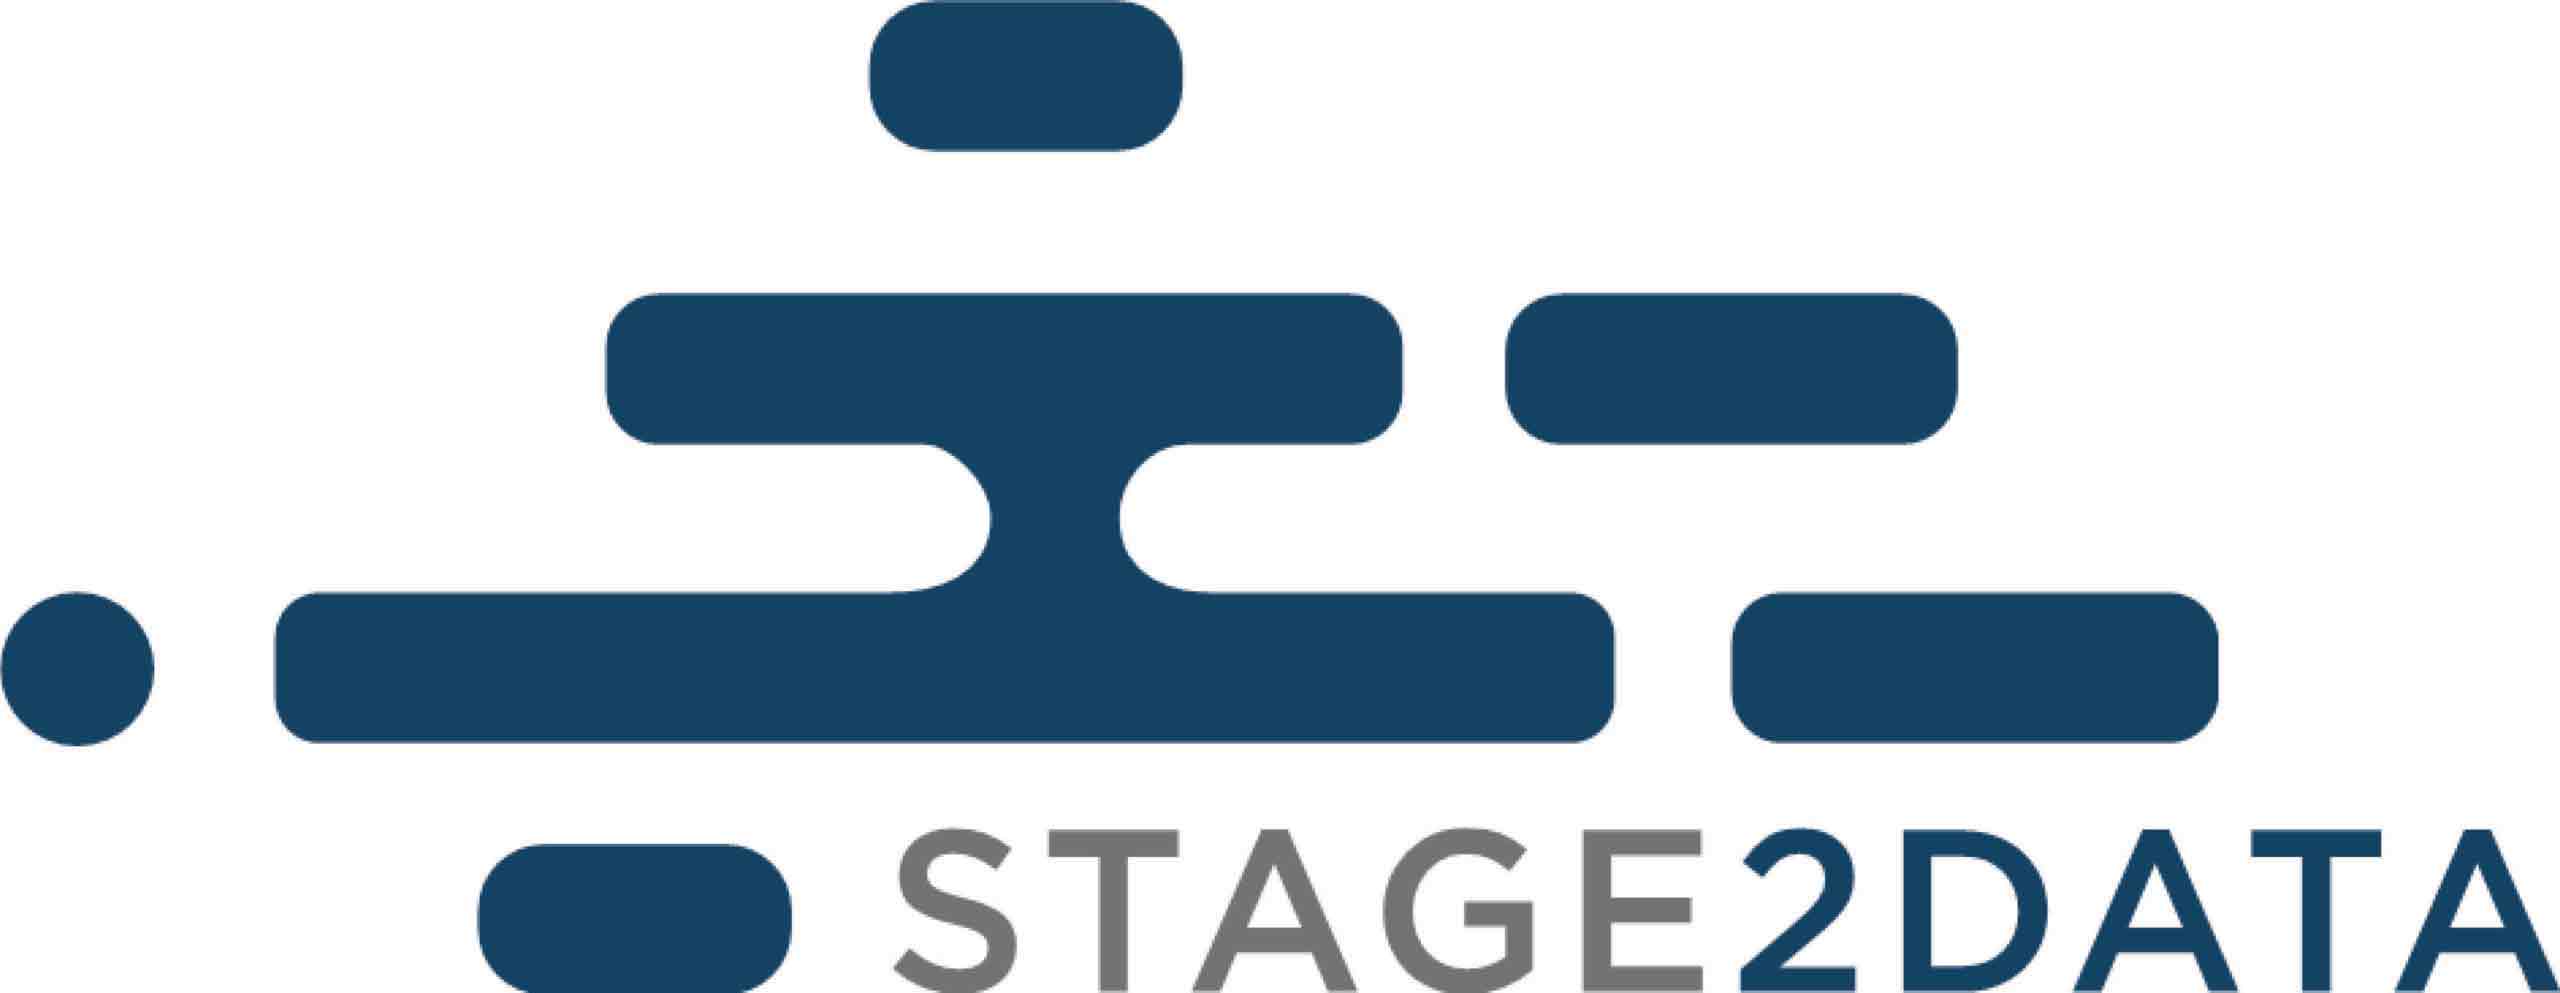 stage2data color logo